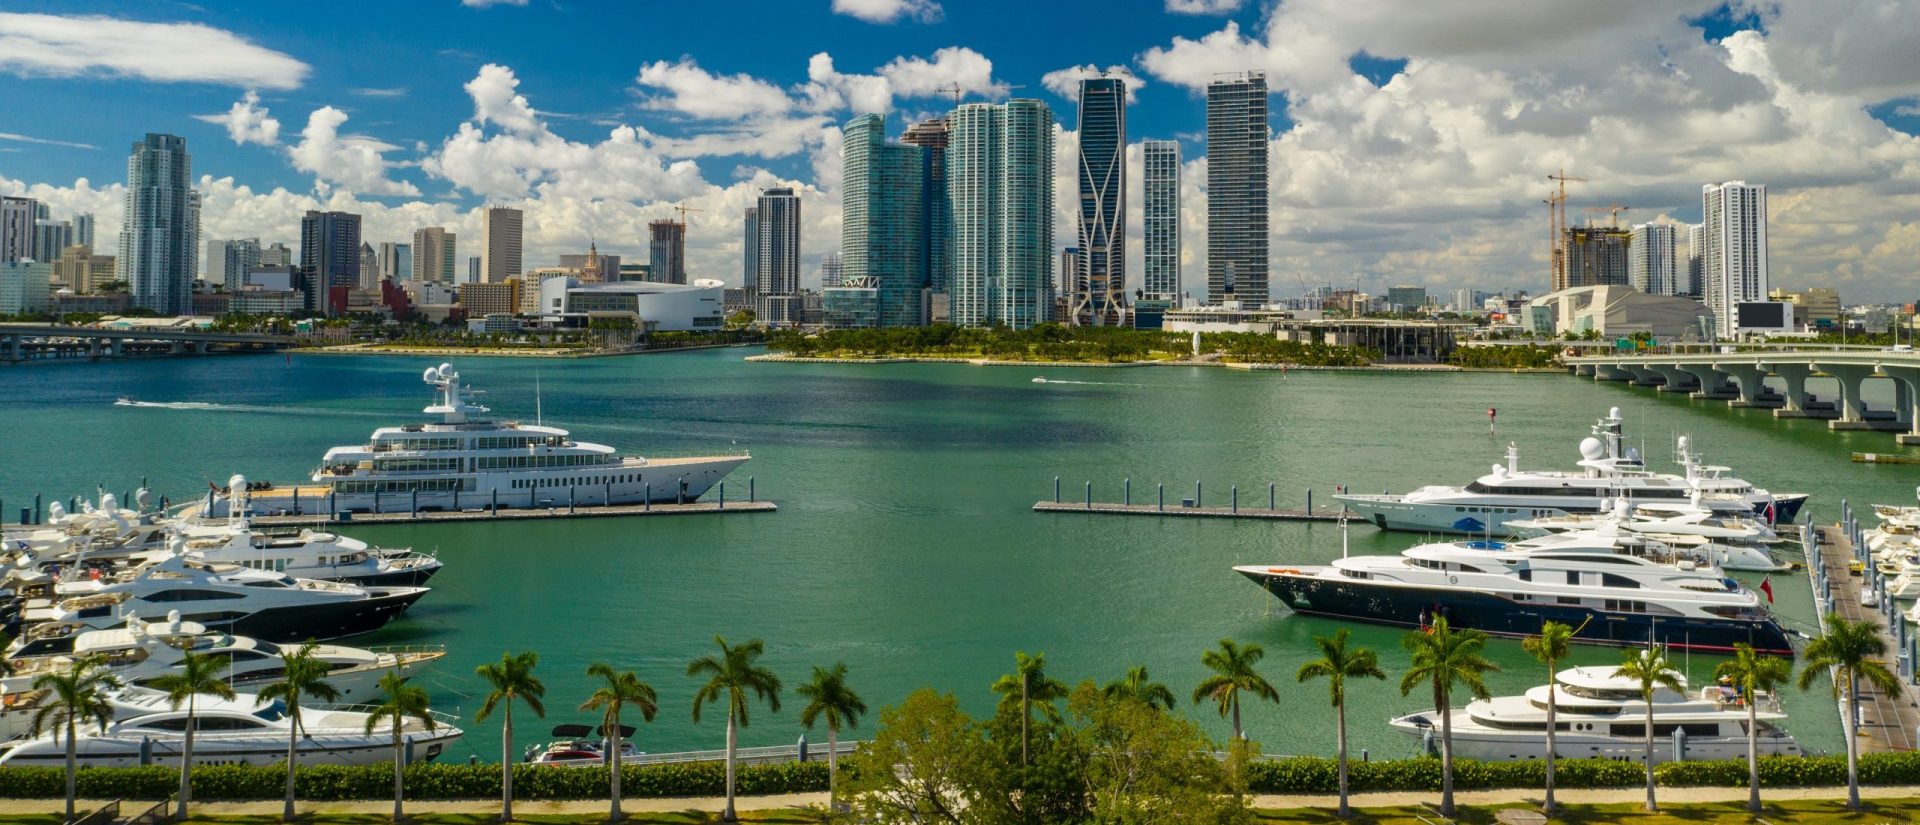 The Miami Yacht Show 2022